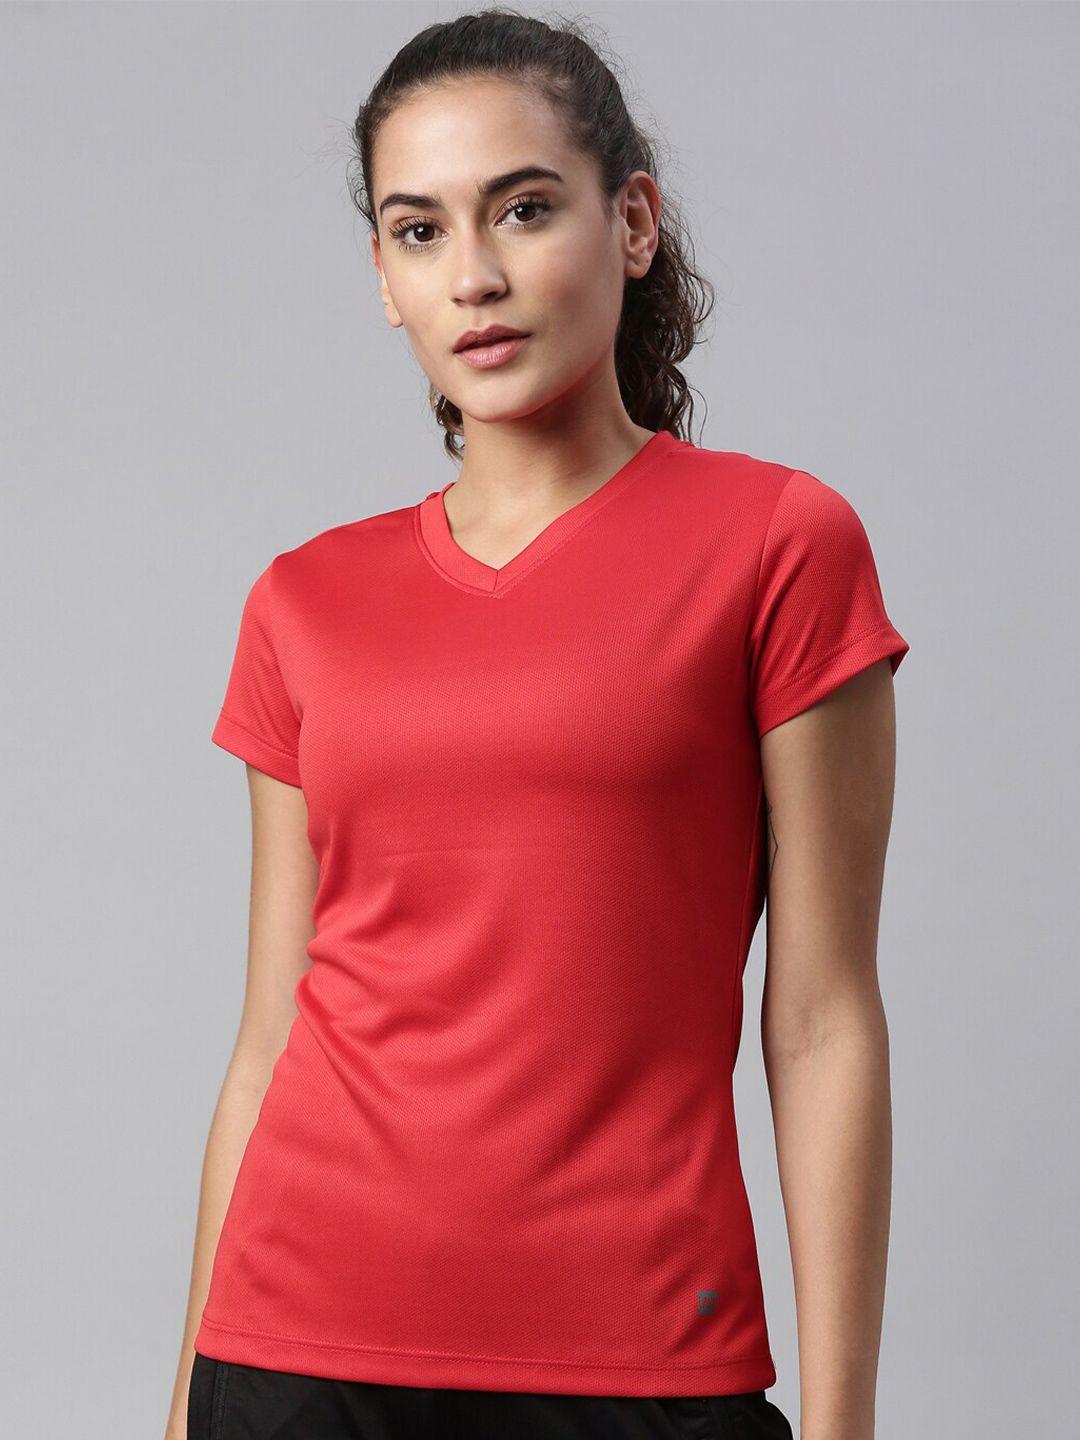 laya women red v-neck training or gym sports t-shirt